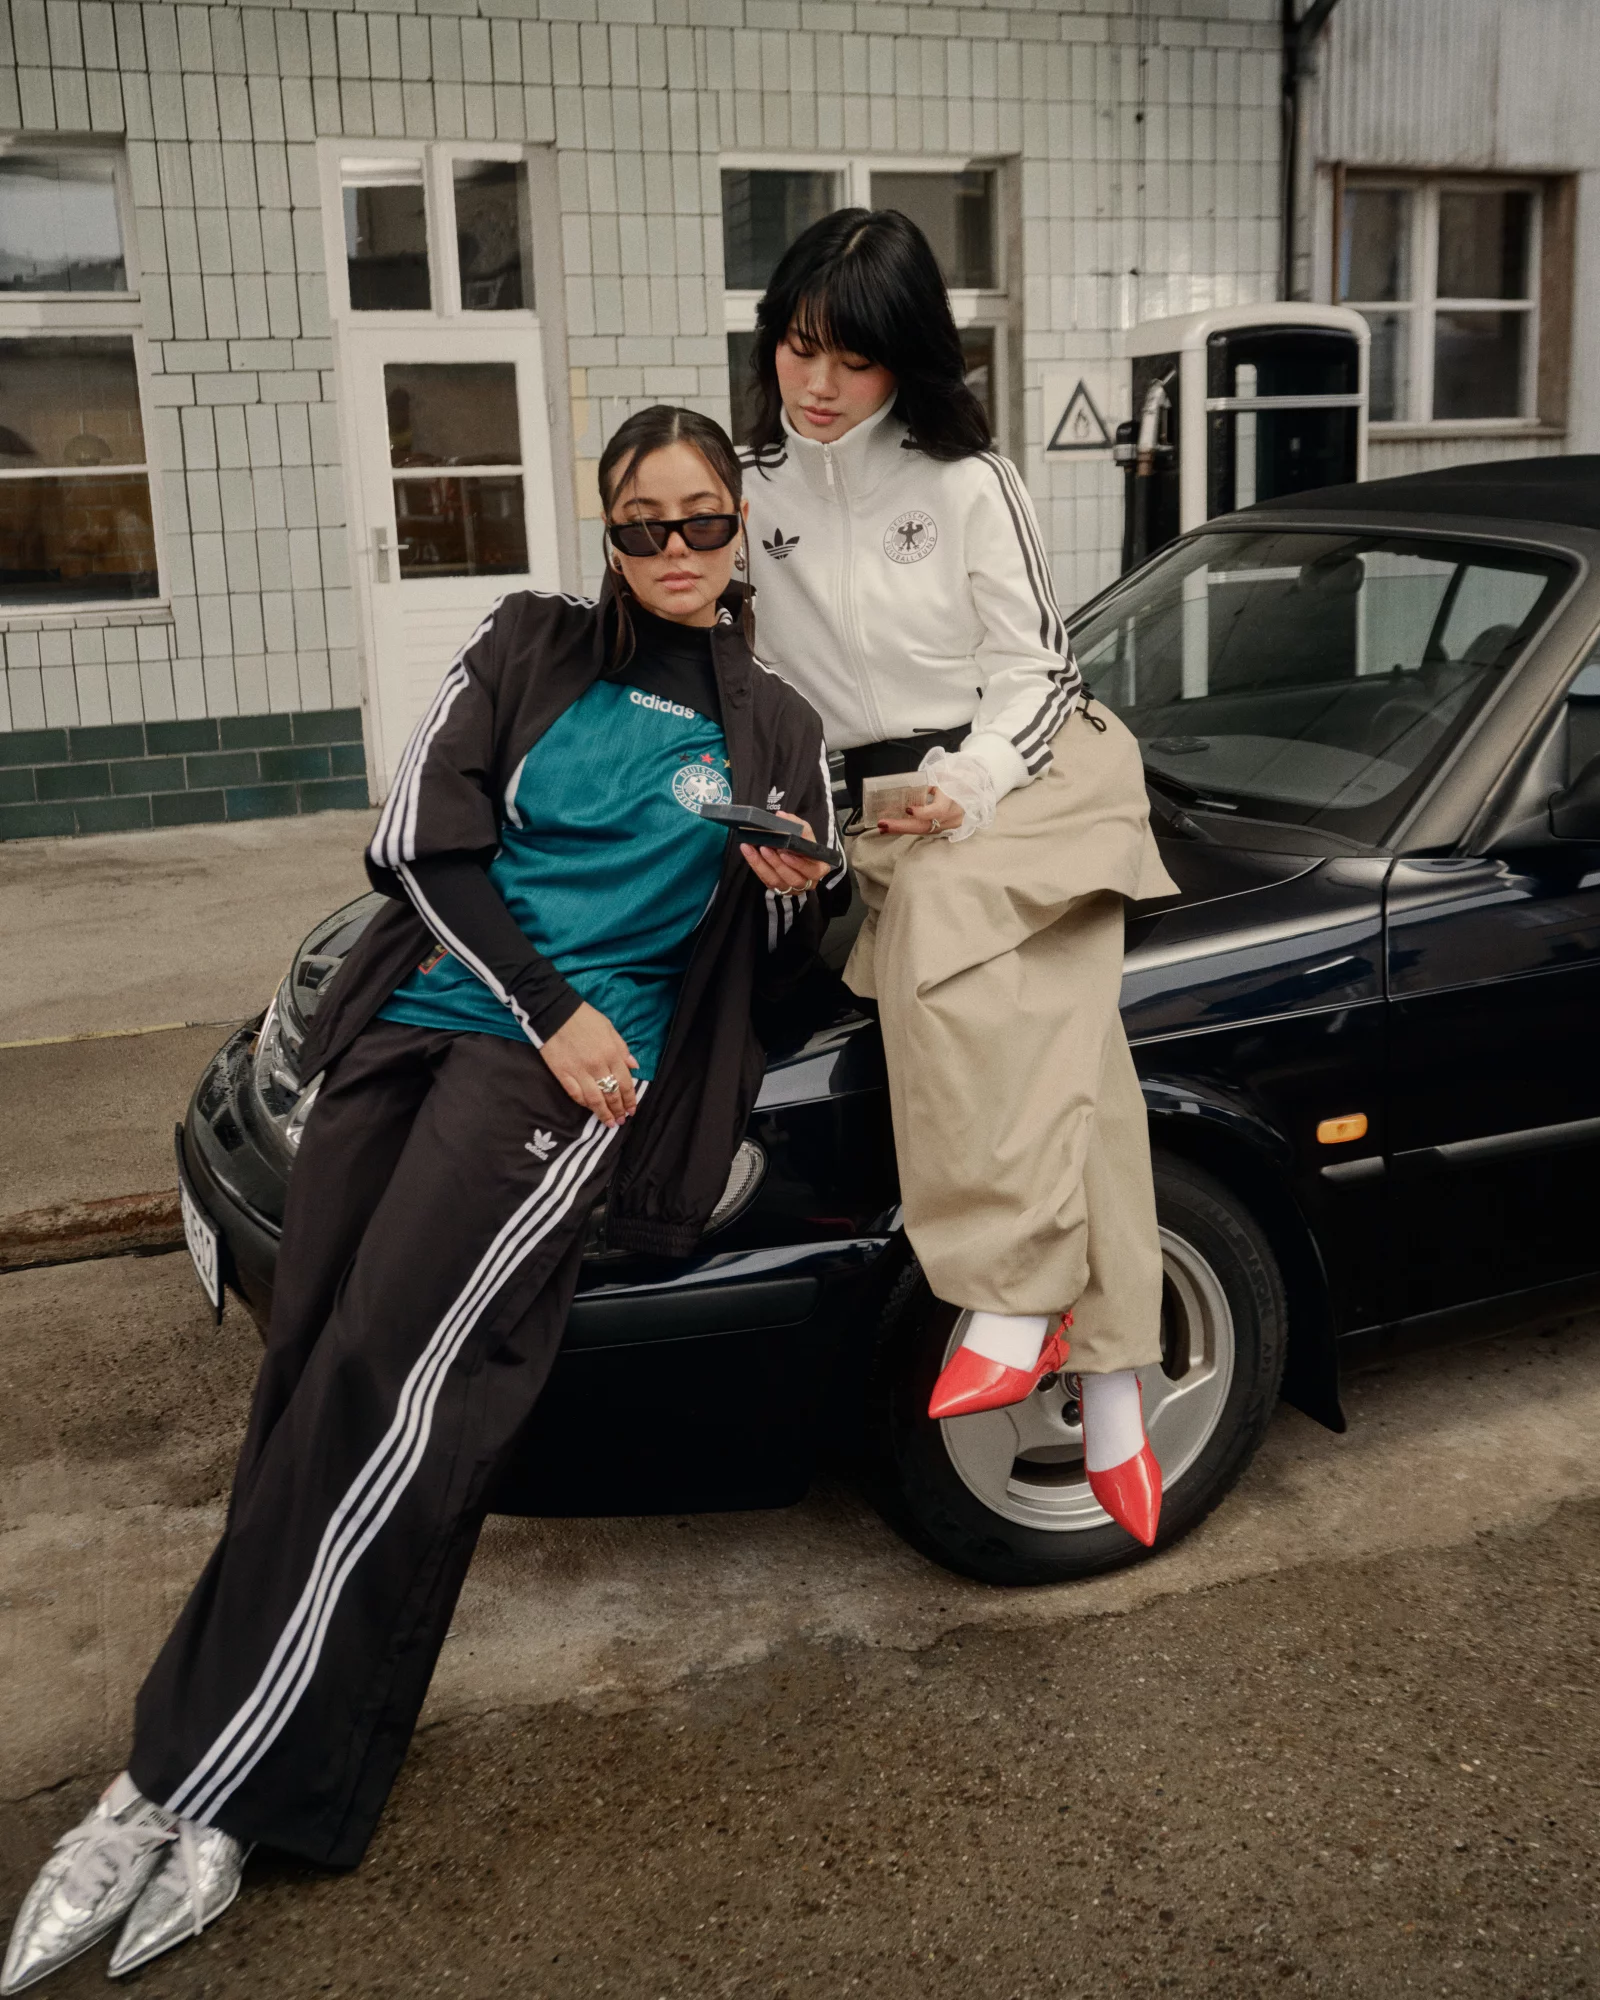 Adidas Bring Back Campaign 12 by Carina DEWHURST